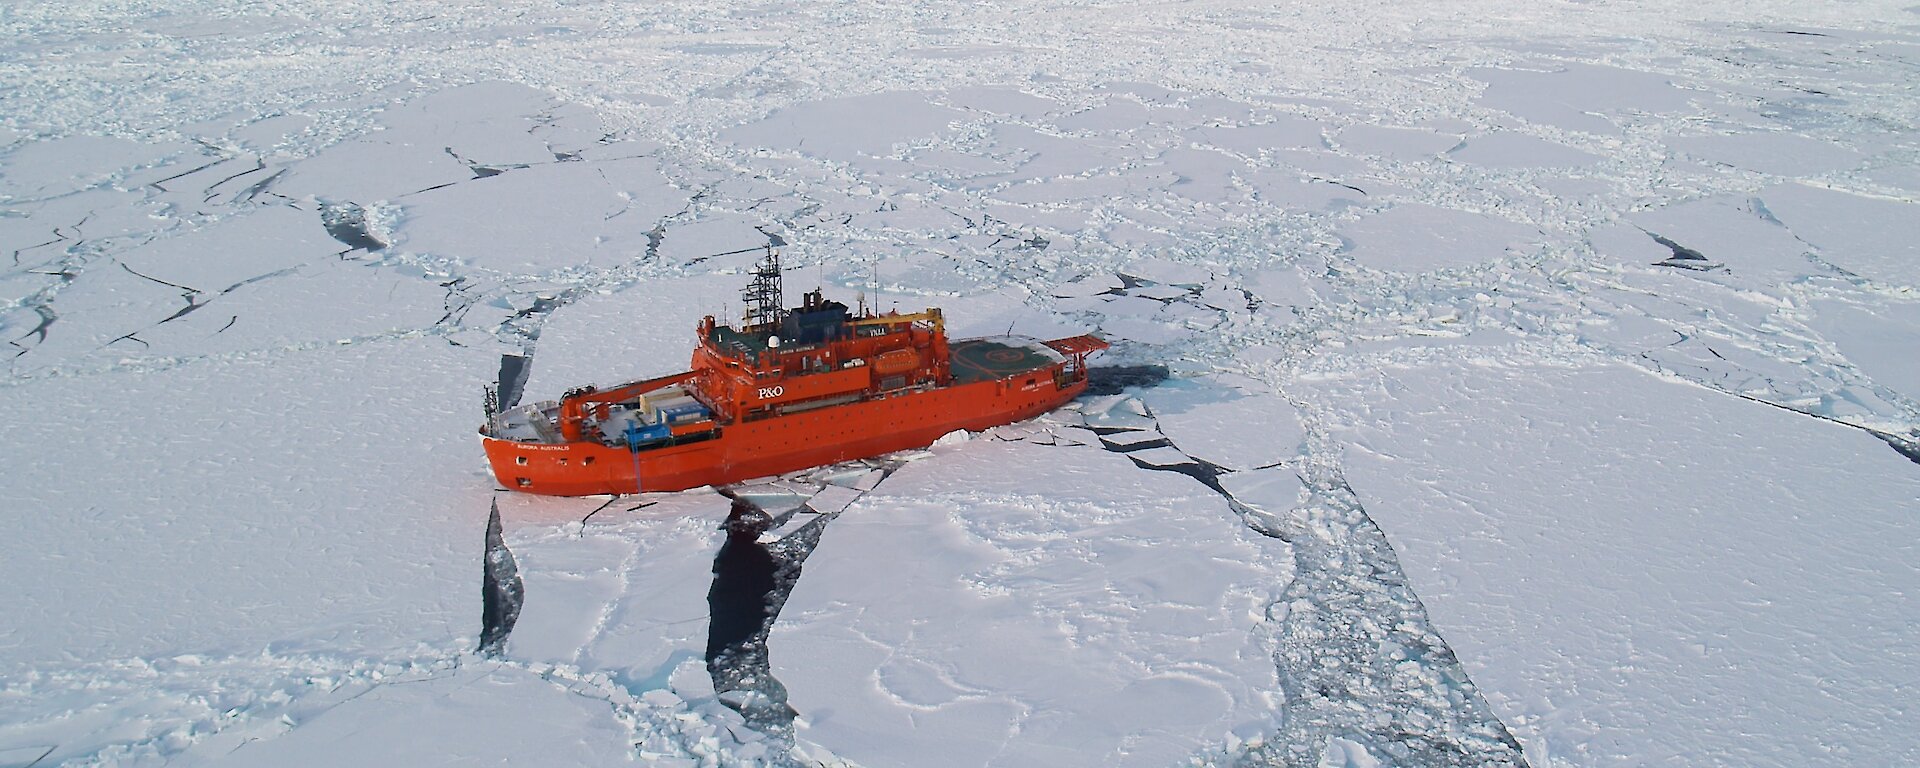 Aurora Australis in the sea ice.